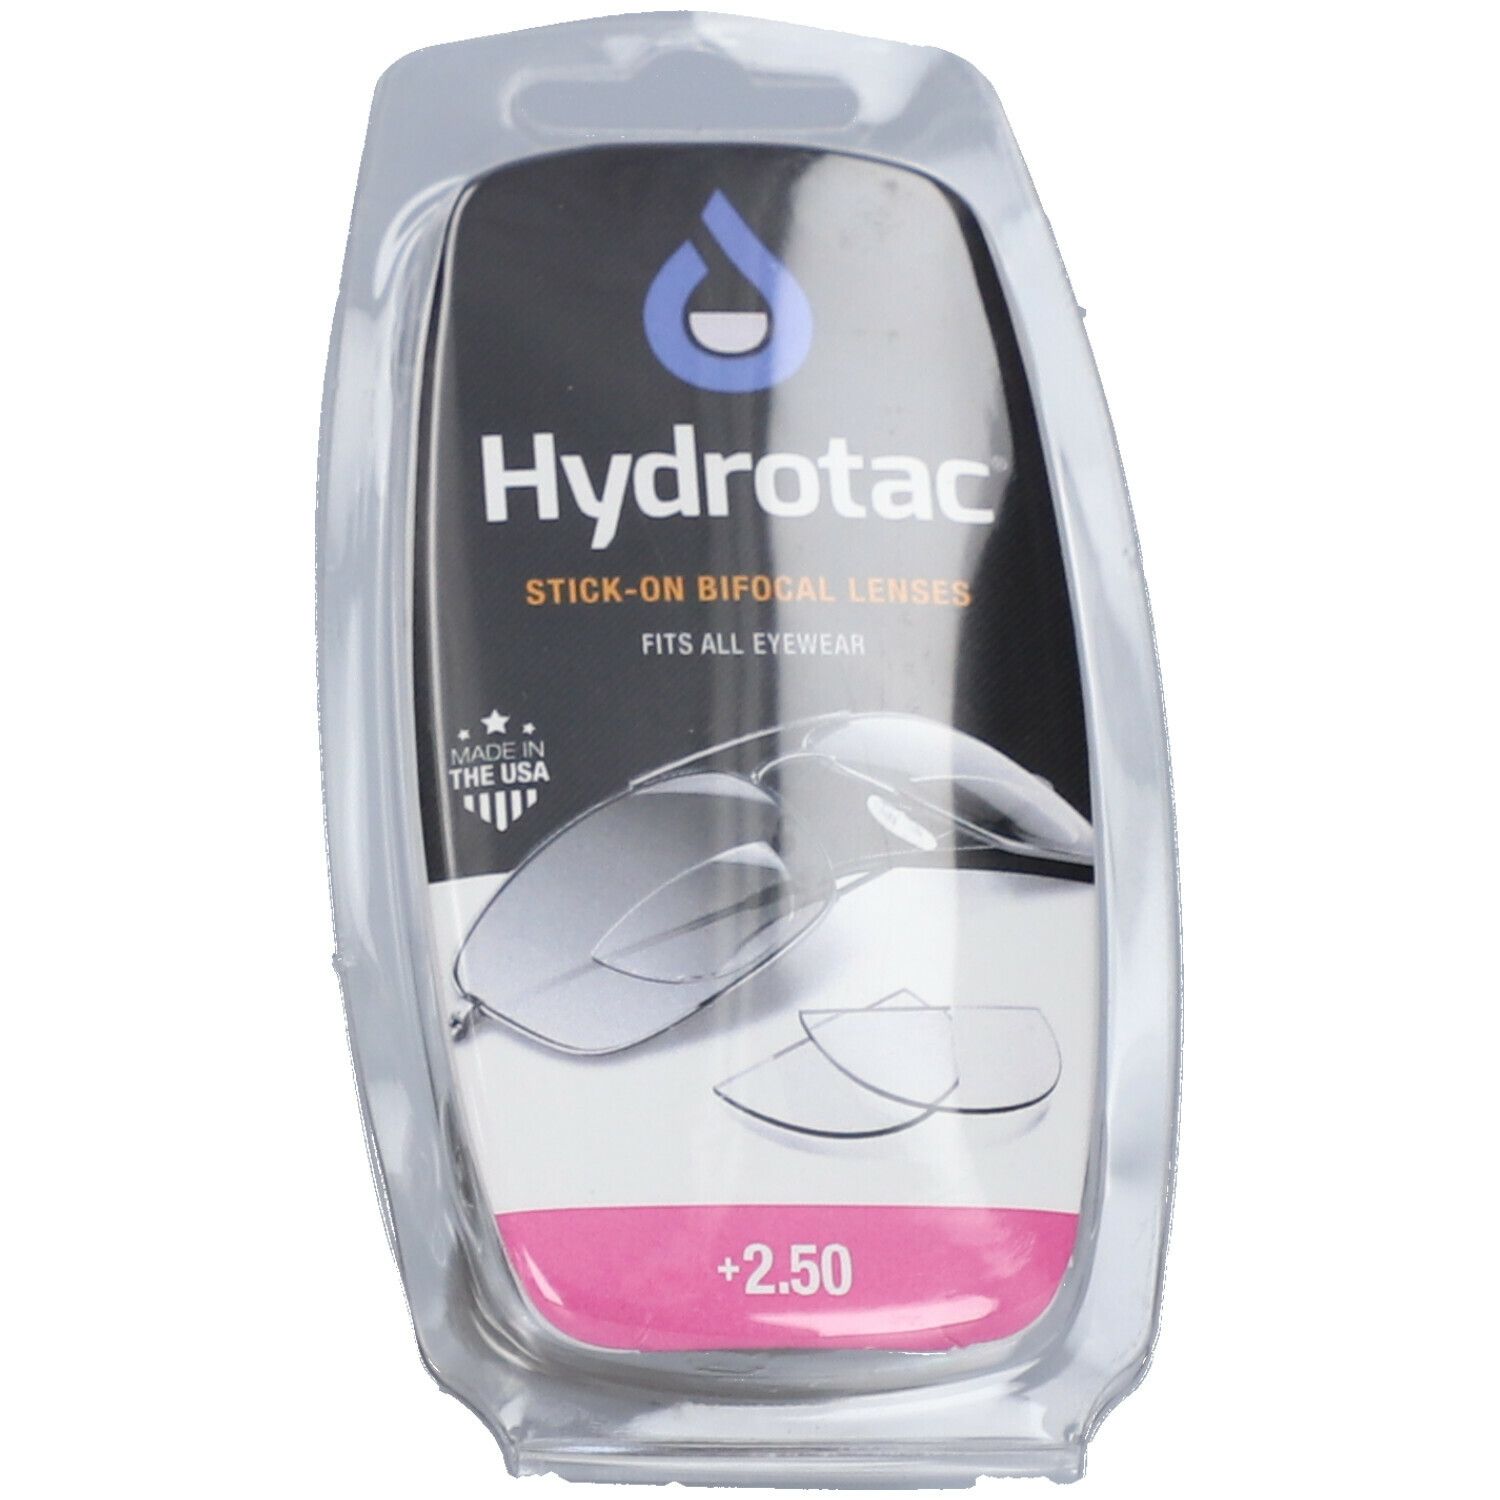 Hydrotac Stick-On Bifocal Lentille +2.50